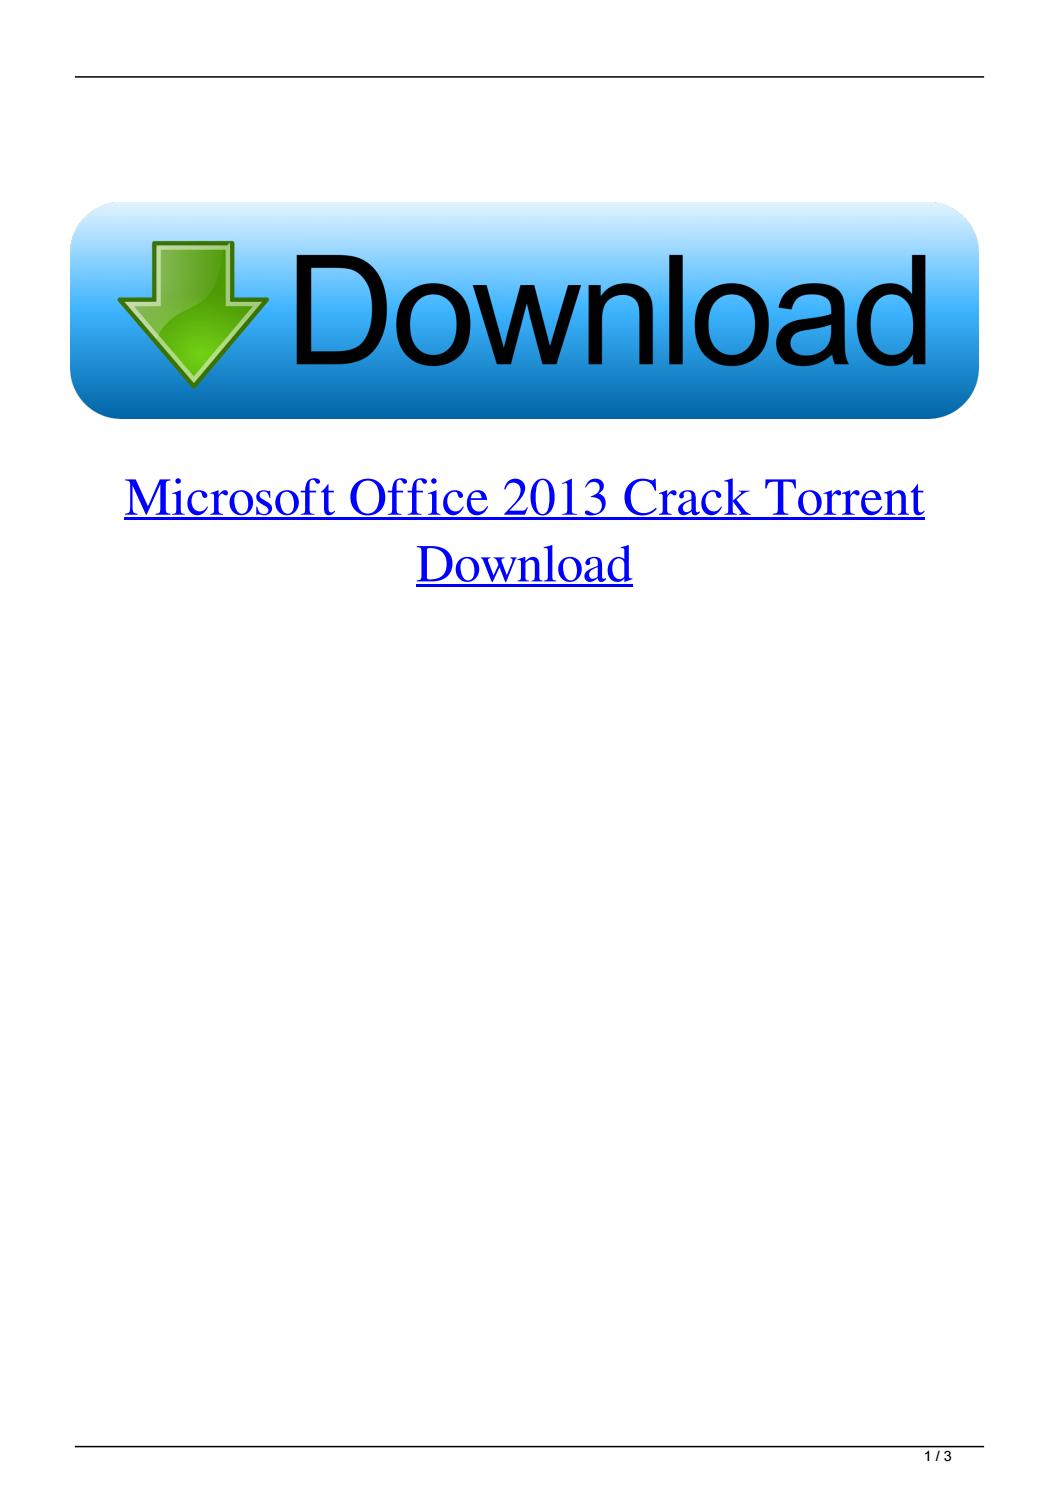 microsoft office word 2010 free download utorrent